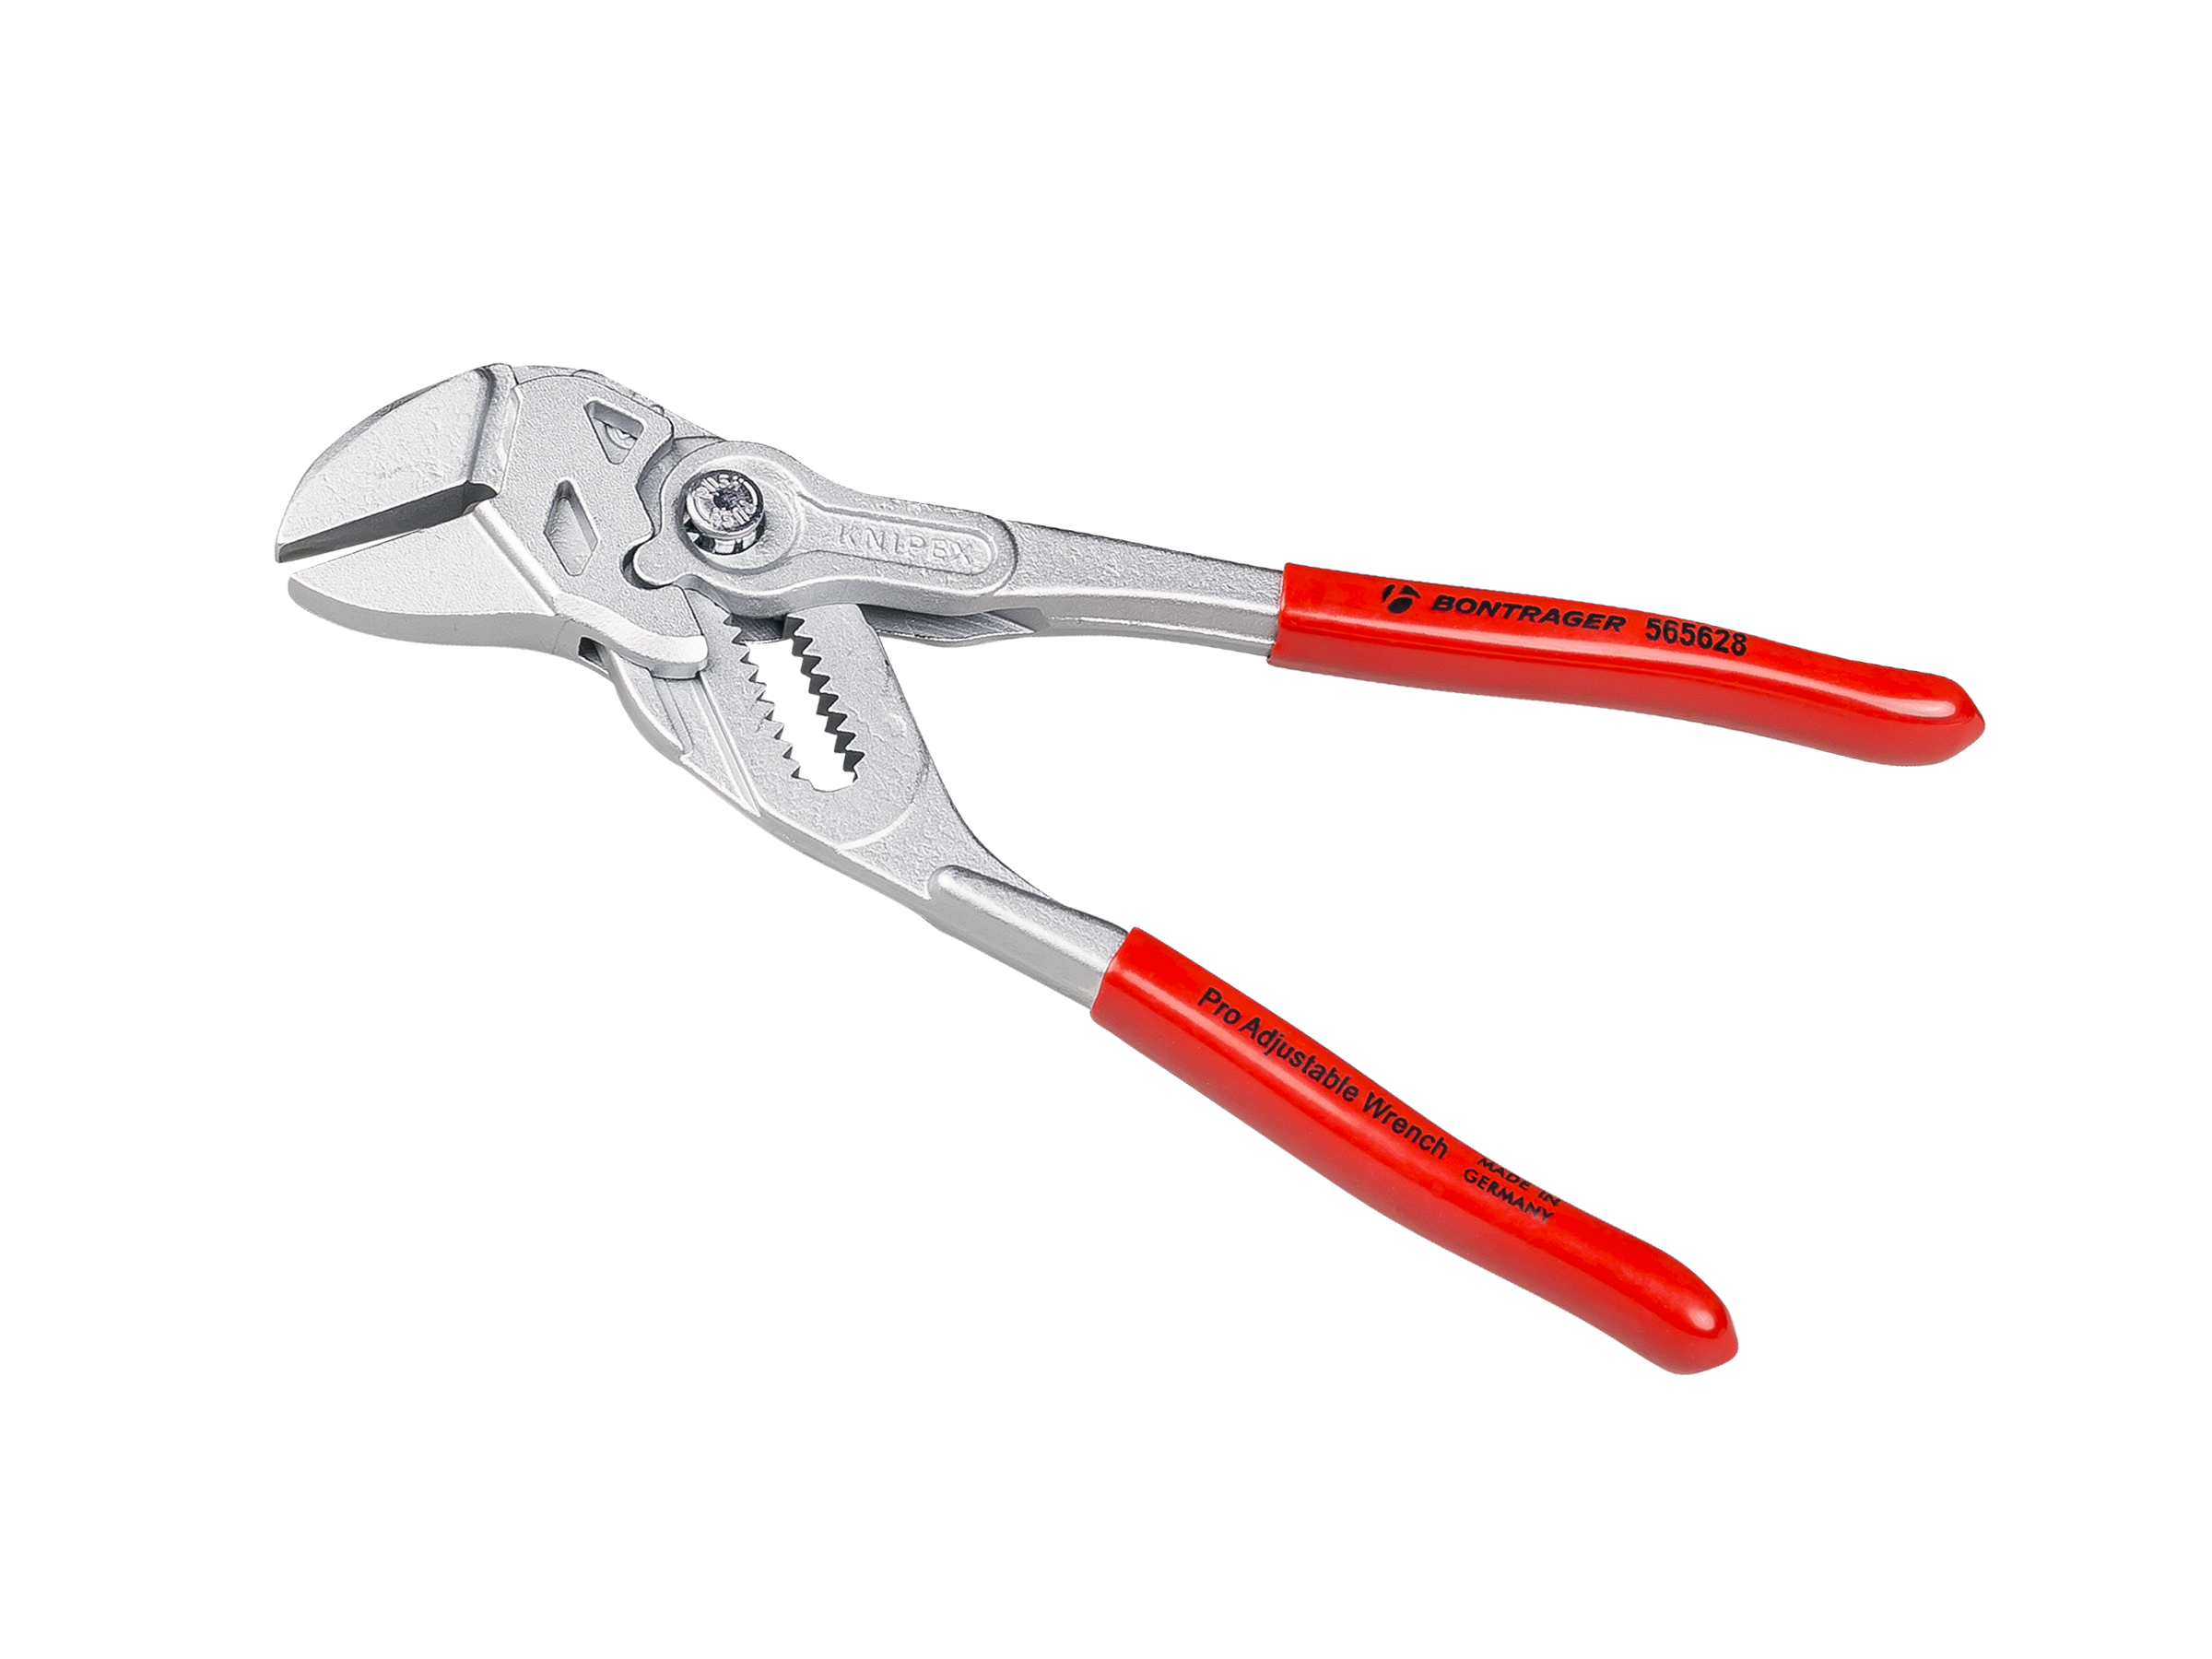 Tool Bontrager Pro Adjustable Wrench